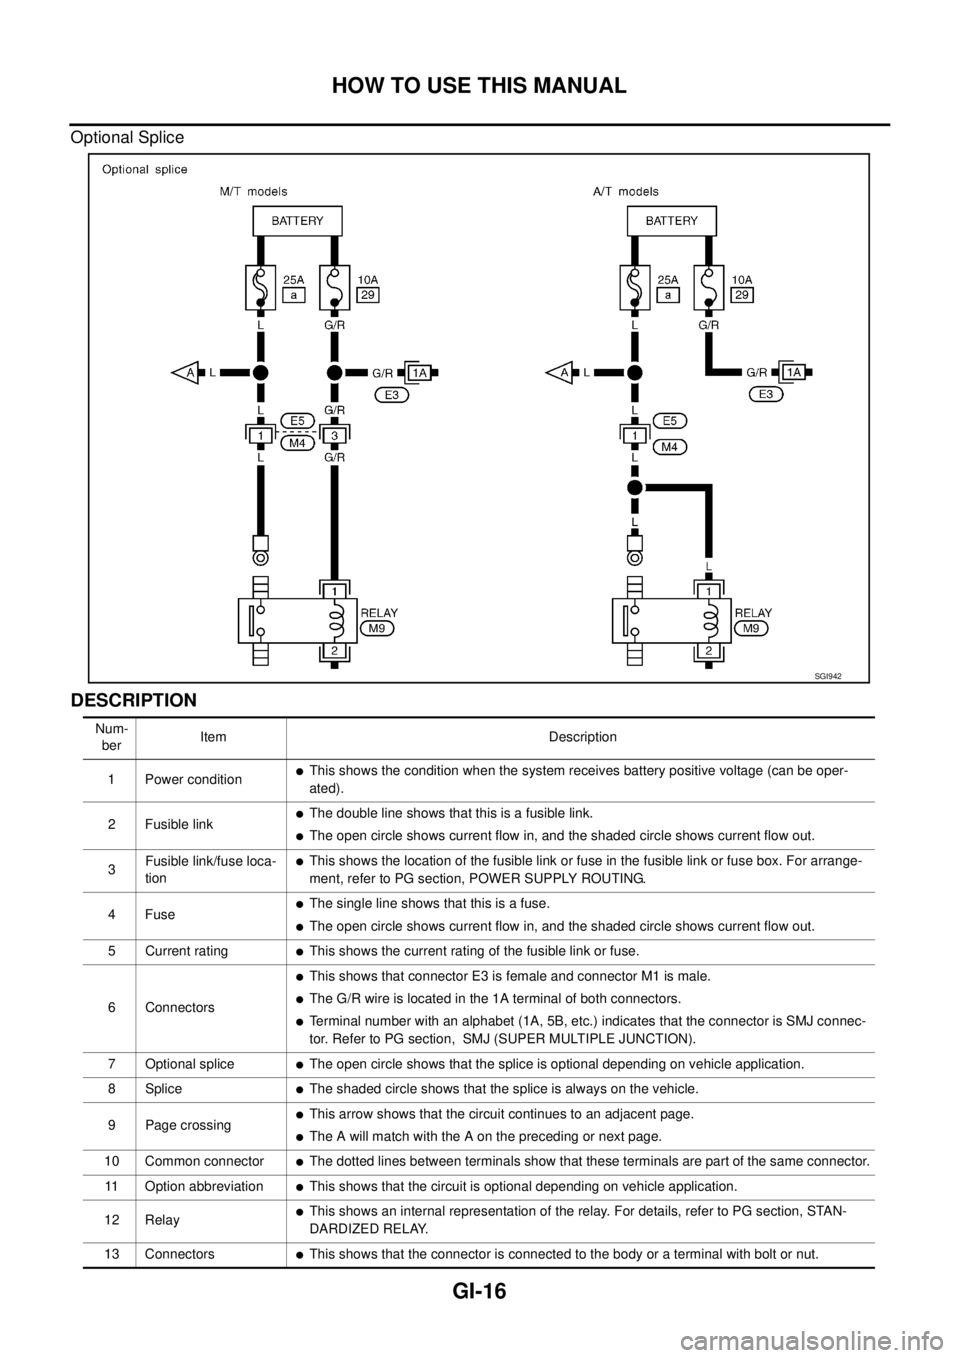 NISSAN X-TRAIL 2005  Service Repair Manual GI-16
HOW TO USE THIS MANUAL
 
Optional Splice
DESCRIPTION 
SGI942
Num-
berItem Description
1 Power condition
This shows the condition when the system receives battery positive voltage (can be oper-
